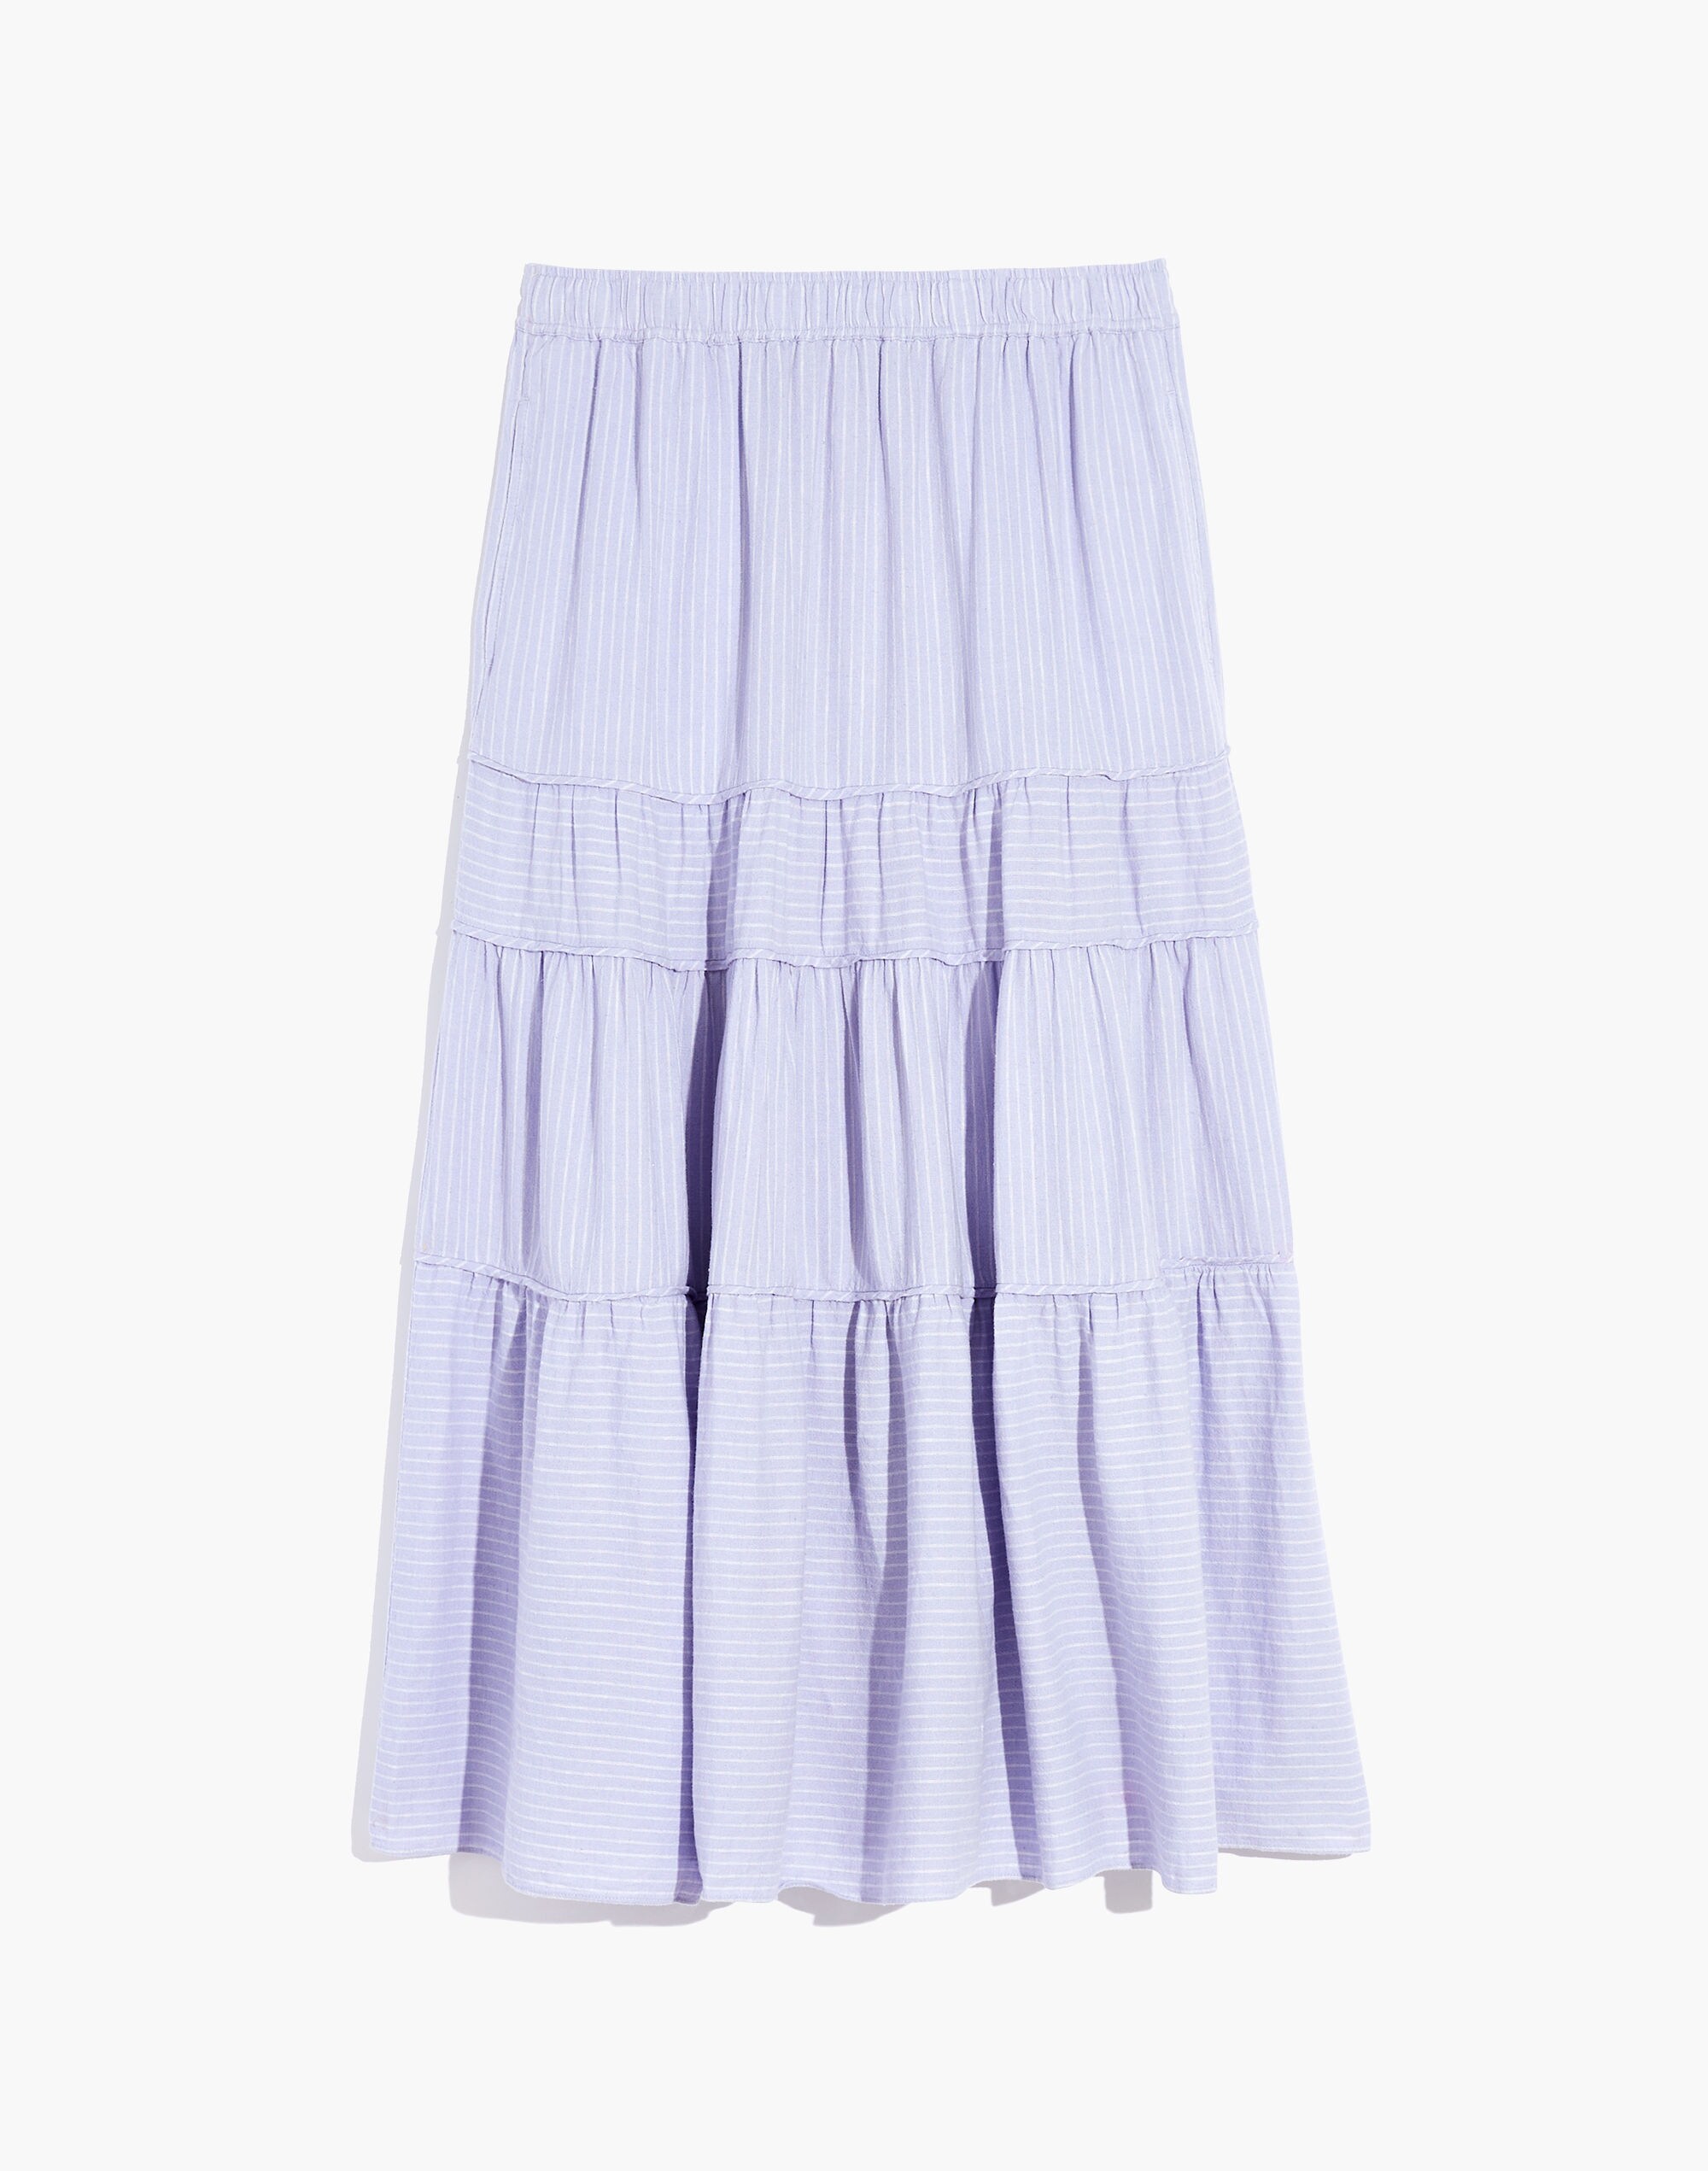 Atele Cotton Blend Long Skirt